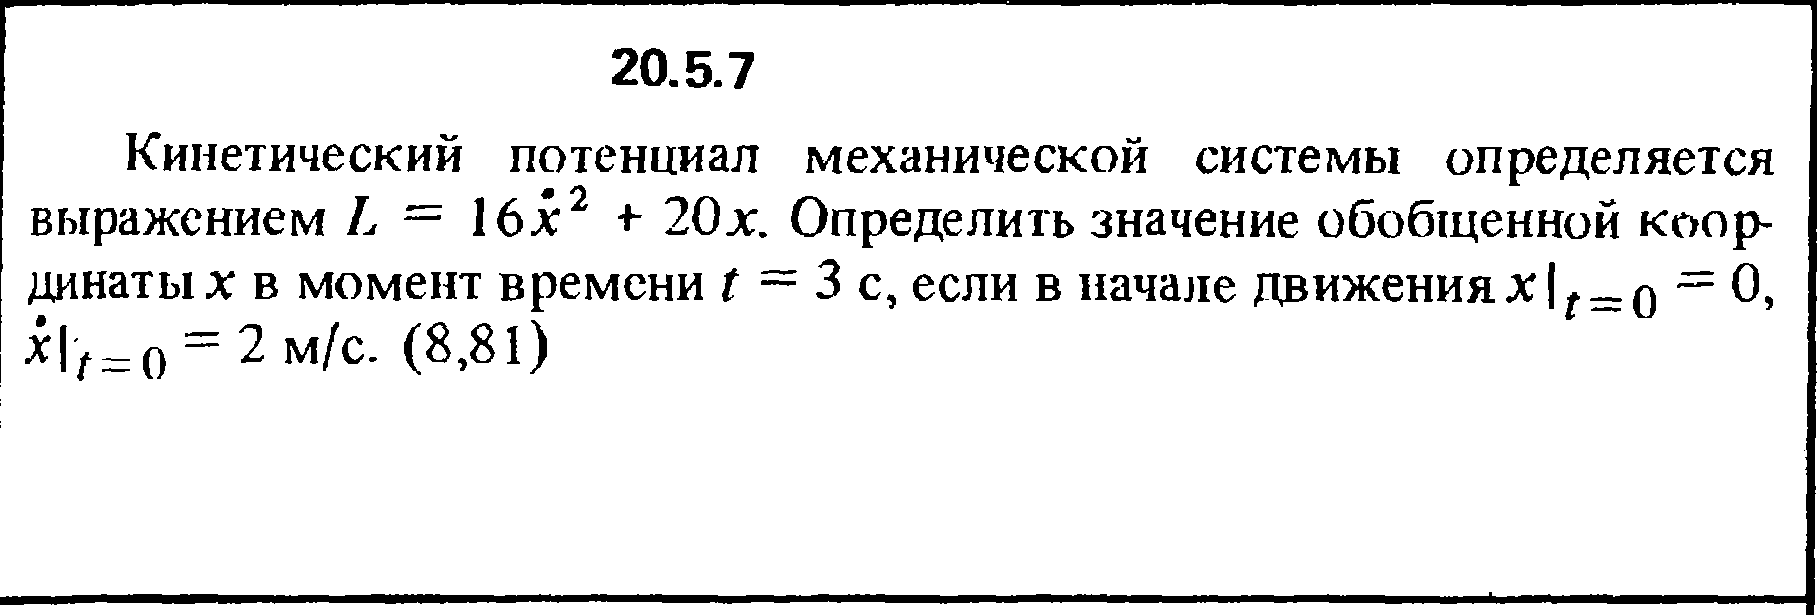 Решение 20.5.7 из сборника (решебника) Кепе О.Е. 1989